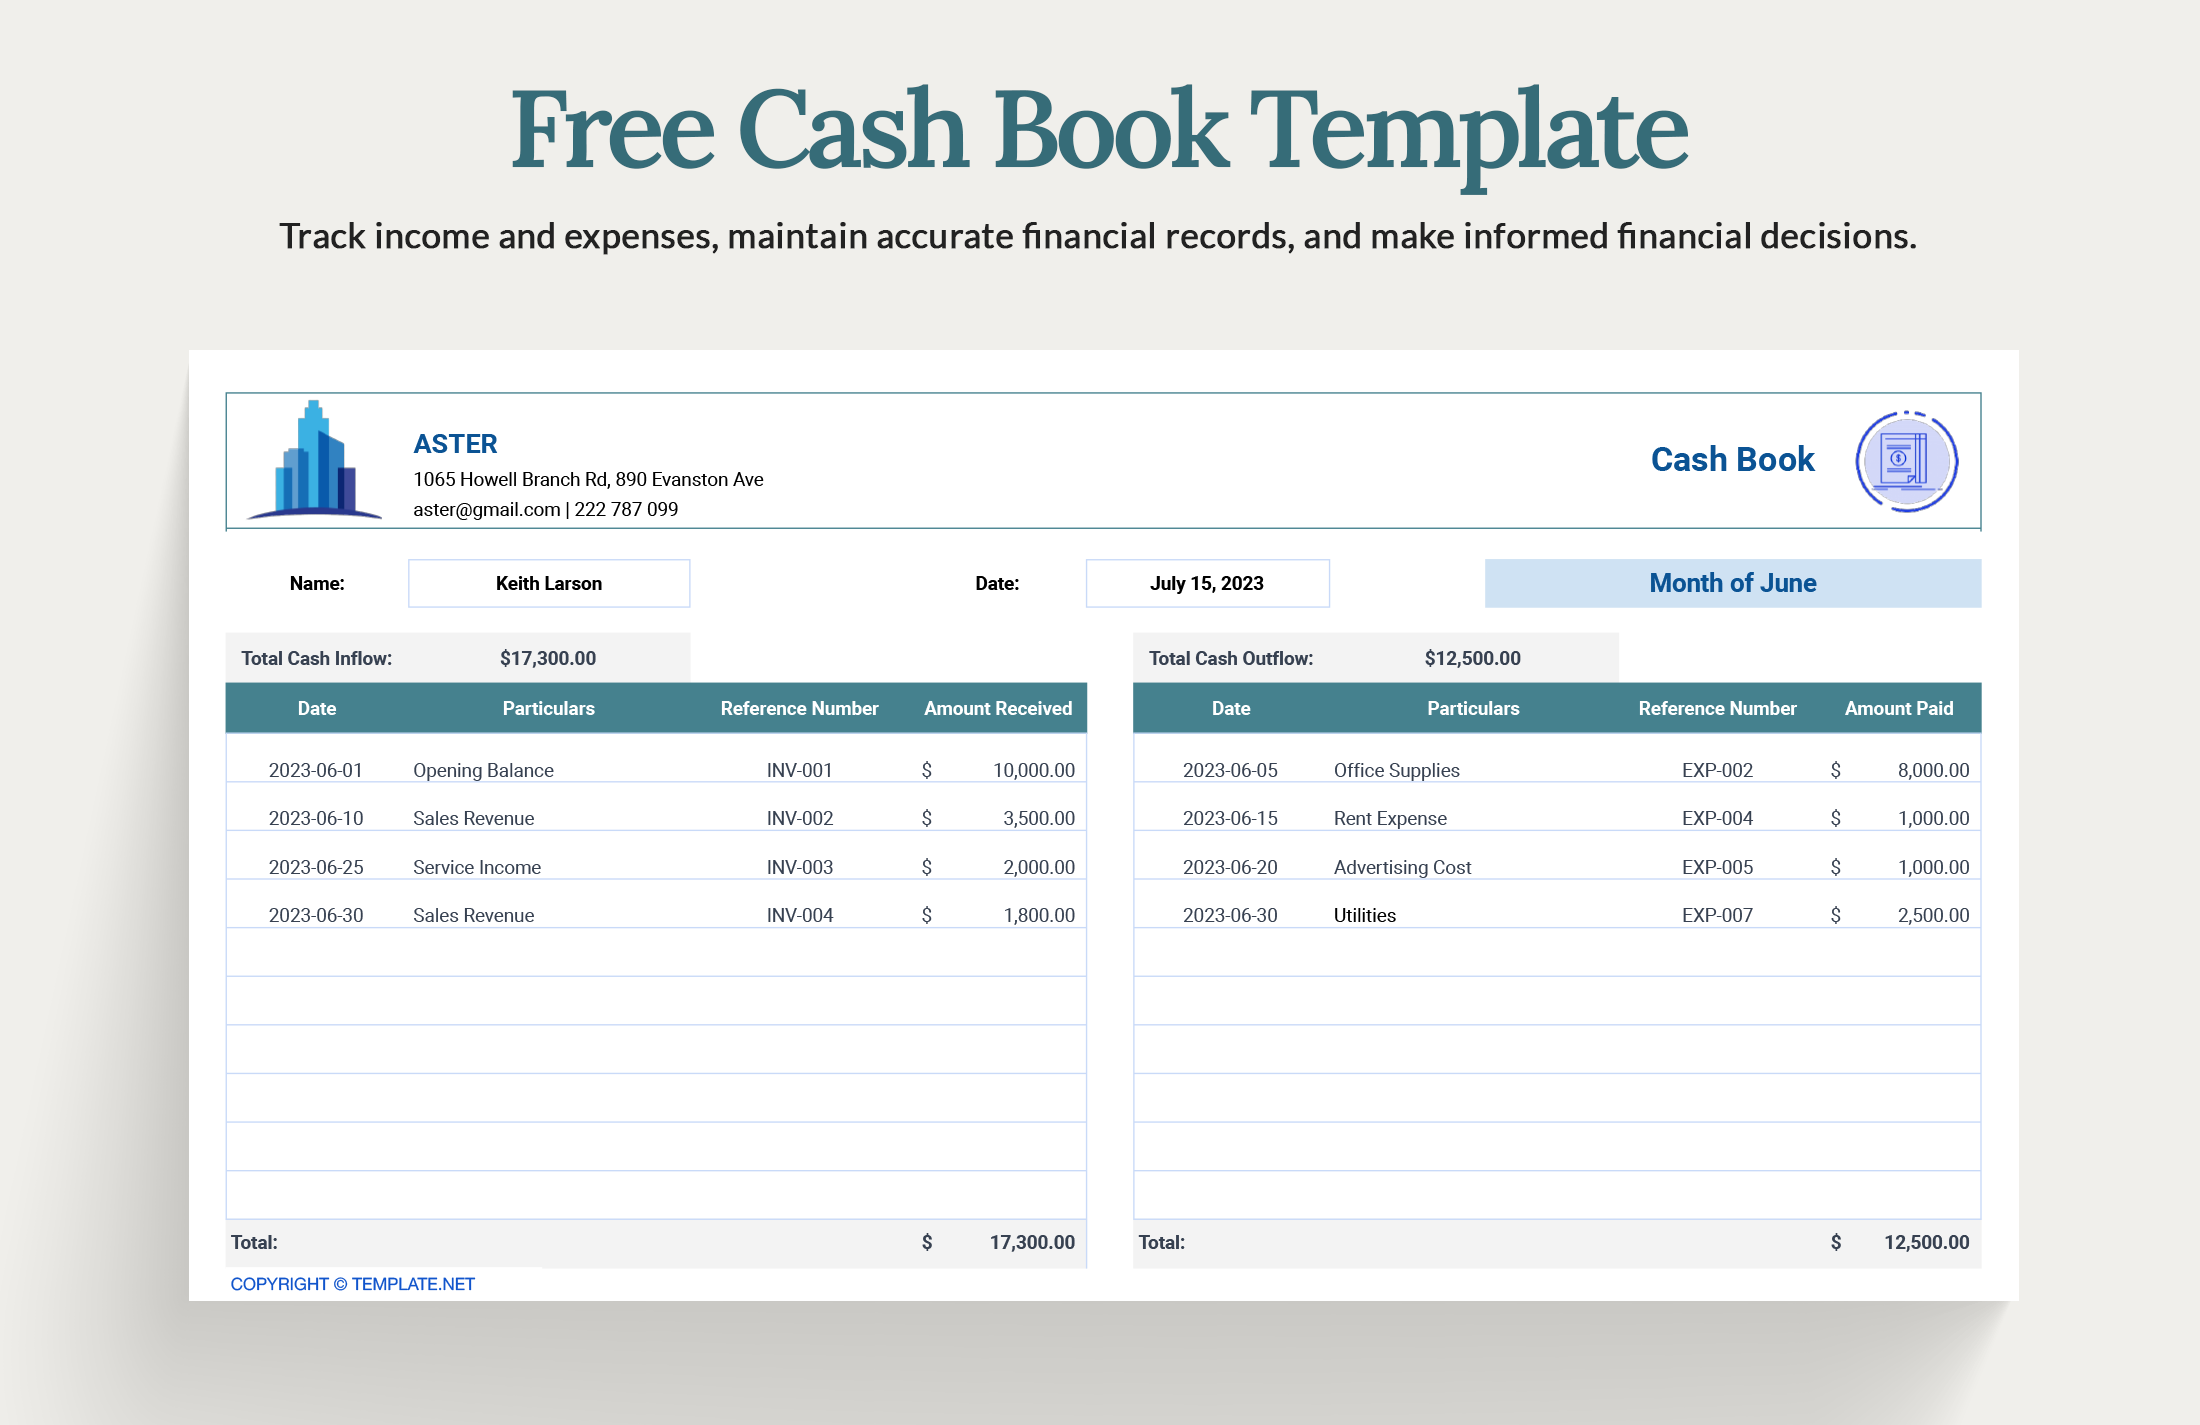 Free Cash Book Template Google Sheets